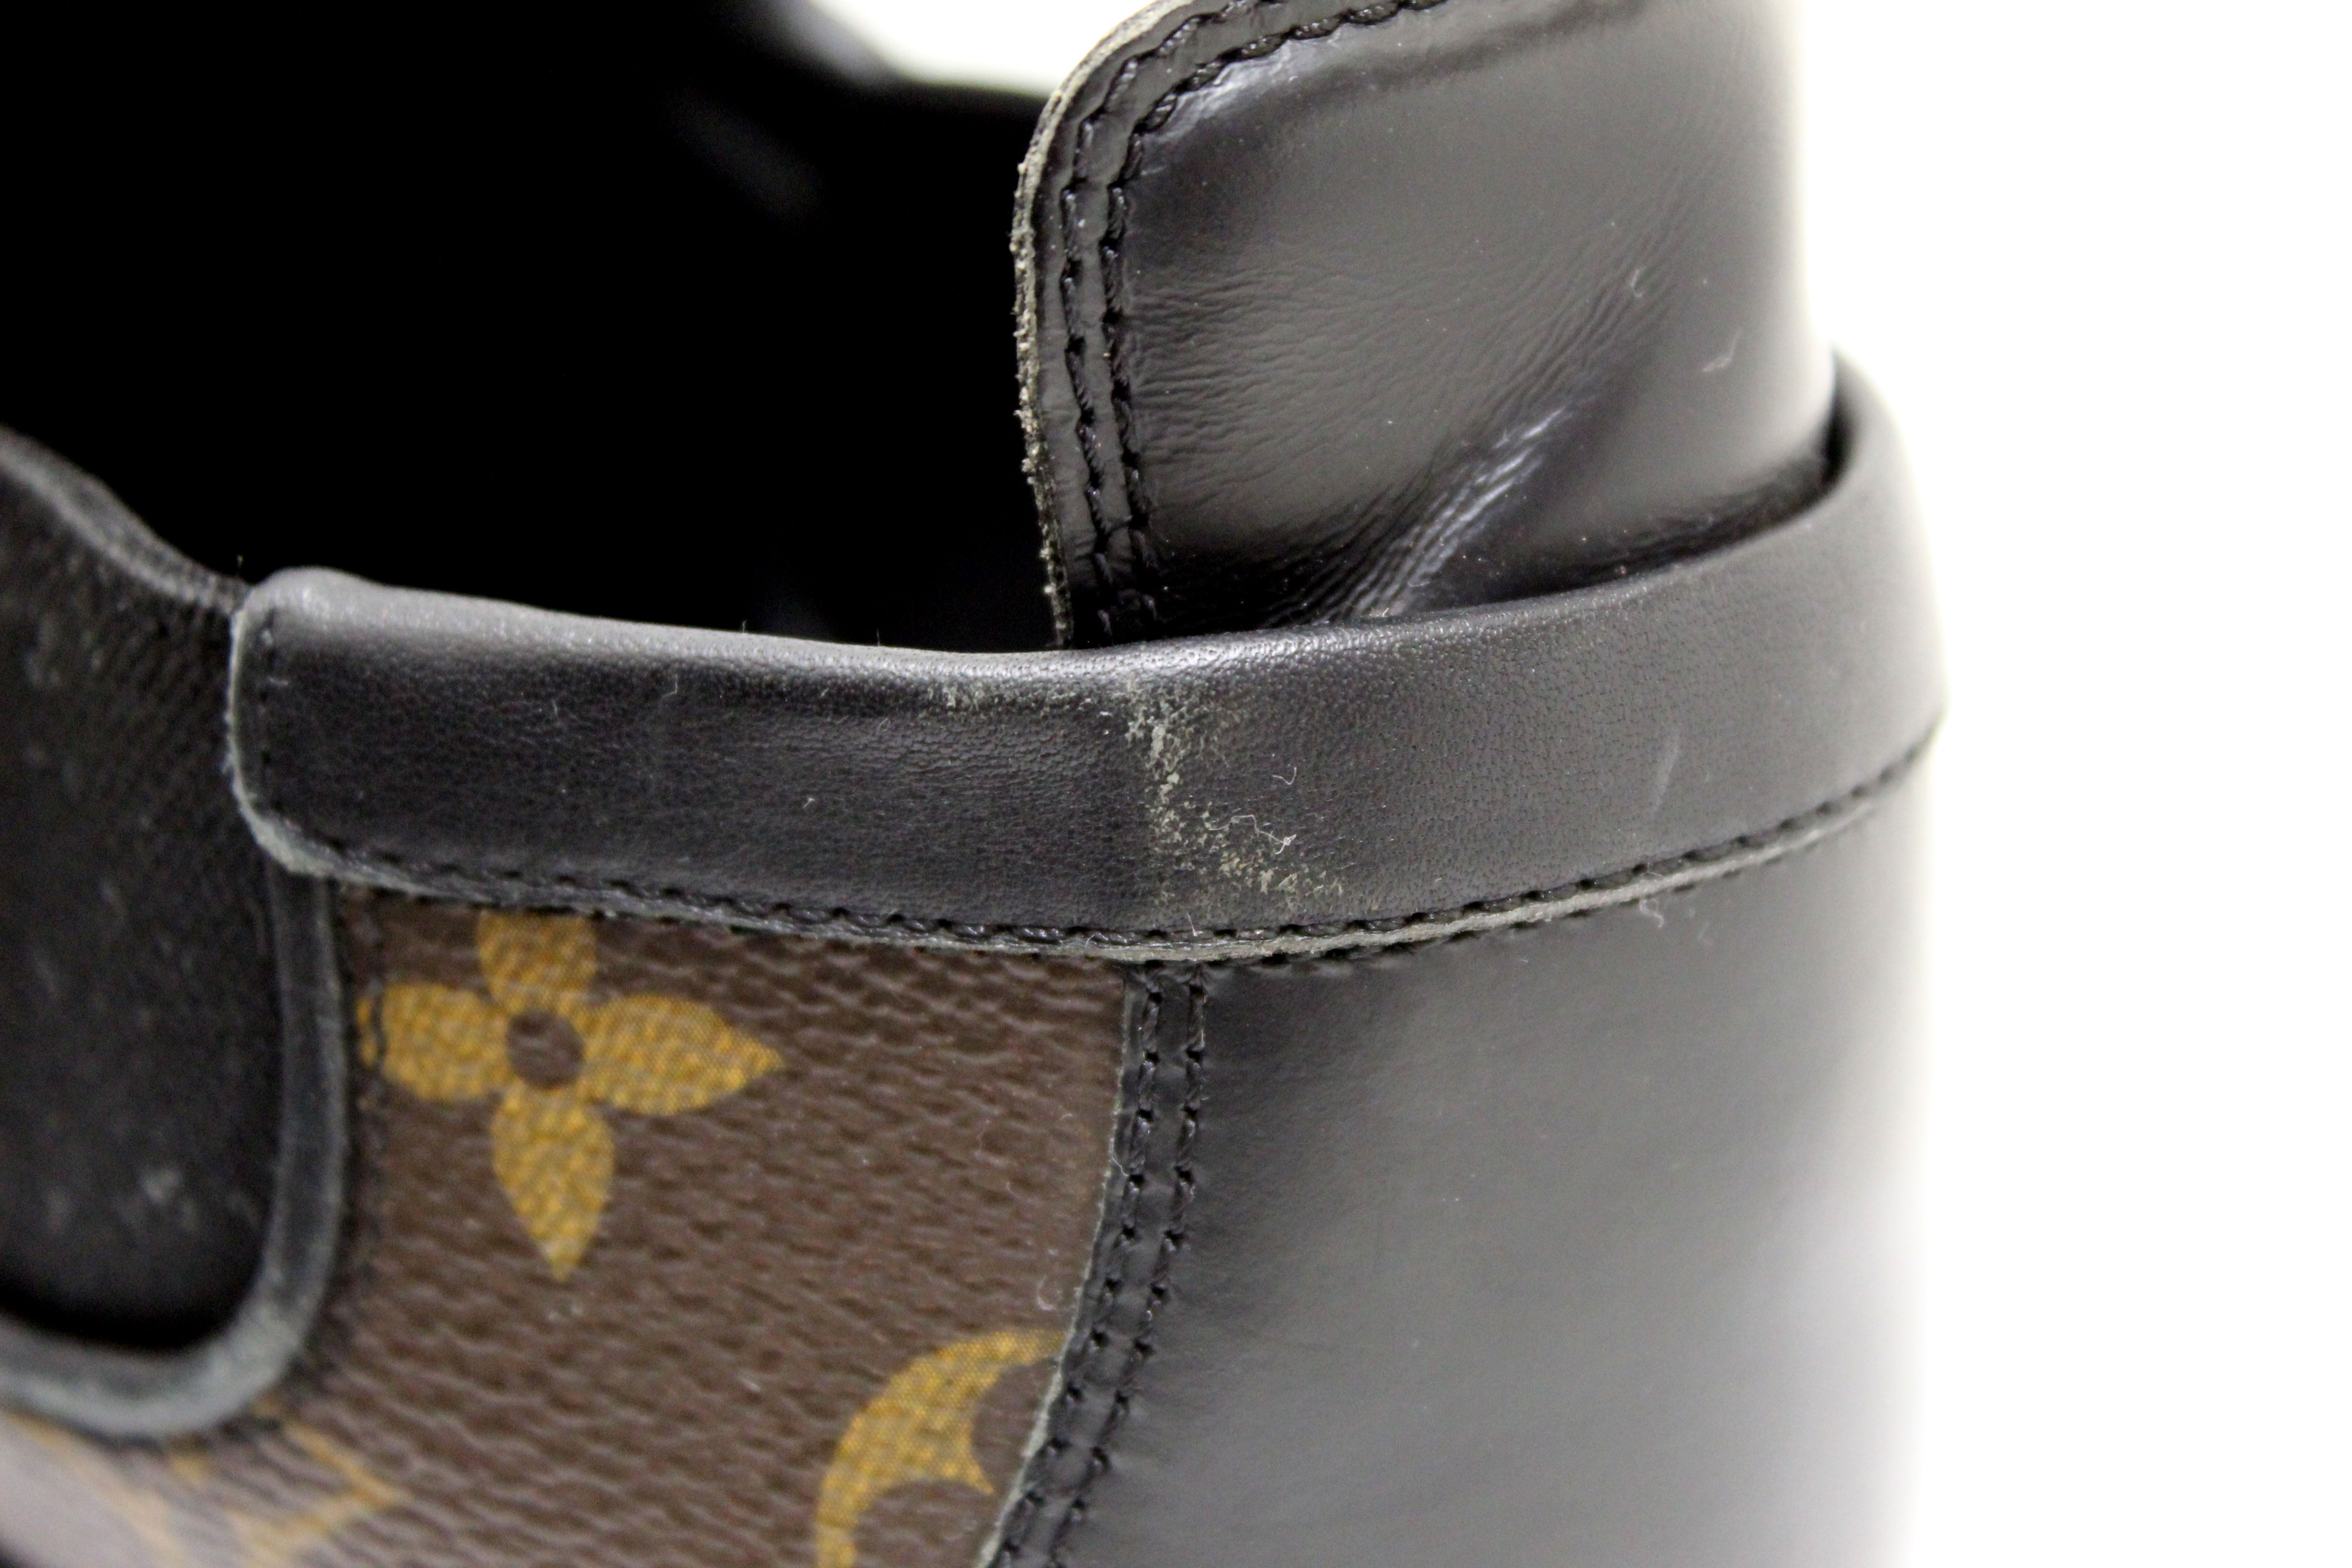 Authentic Louis Vuitton Men's Classic Monogram with Black Leather Slalom Low Top Sneaker Size 8.5